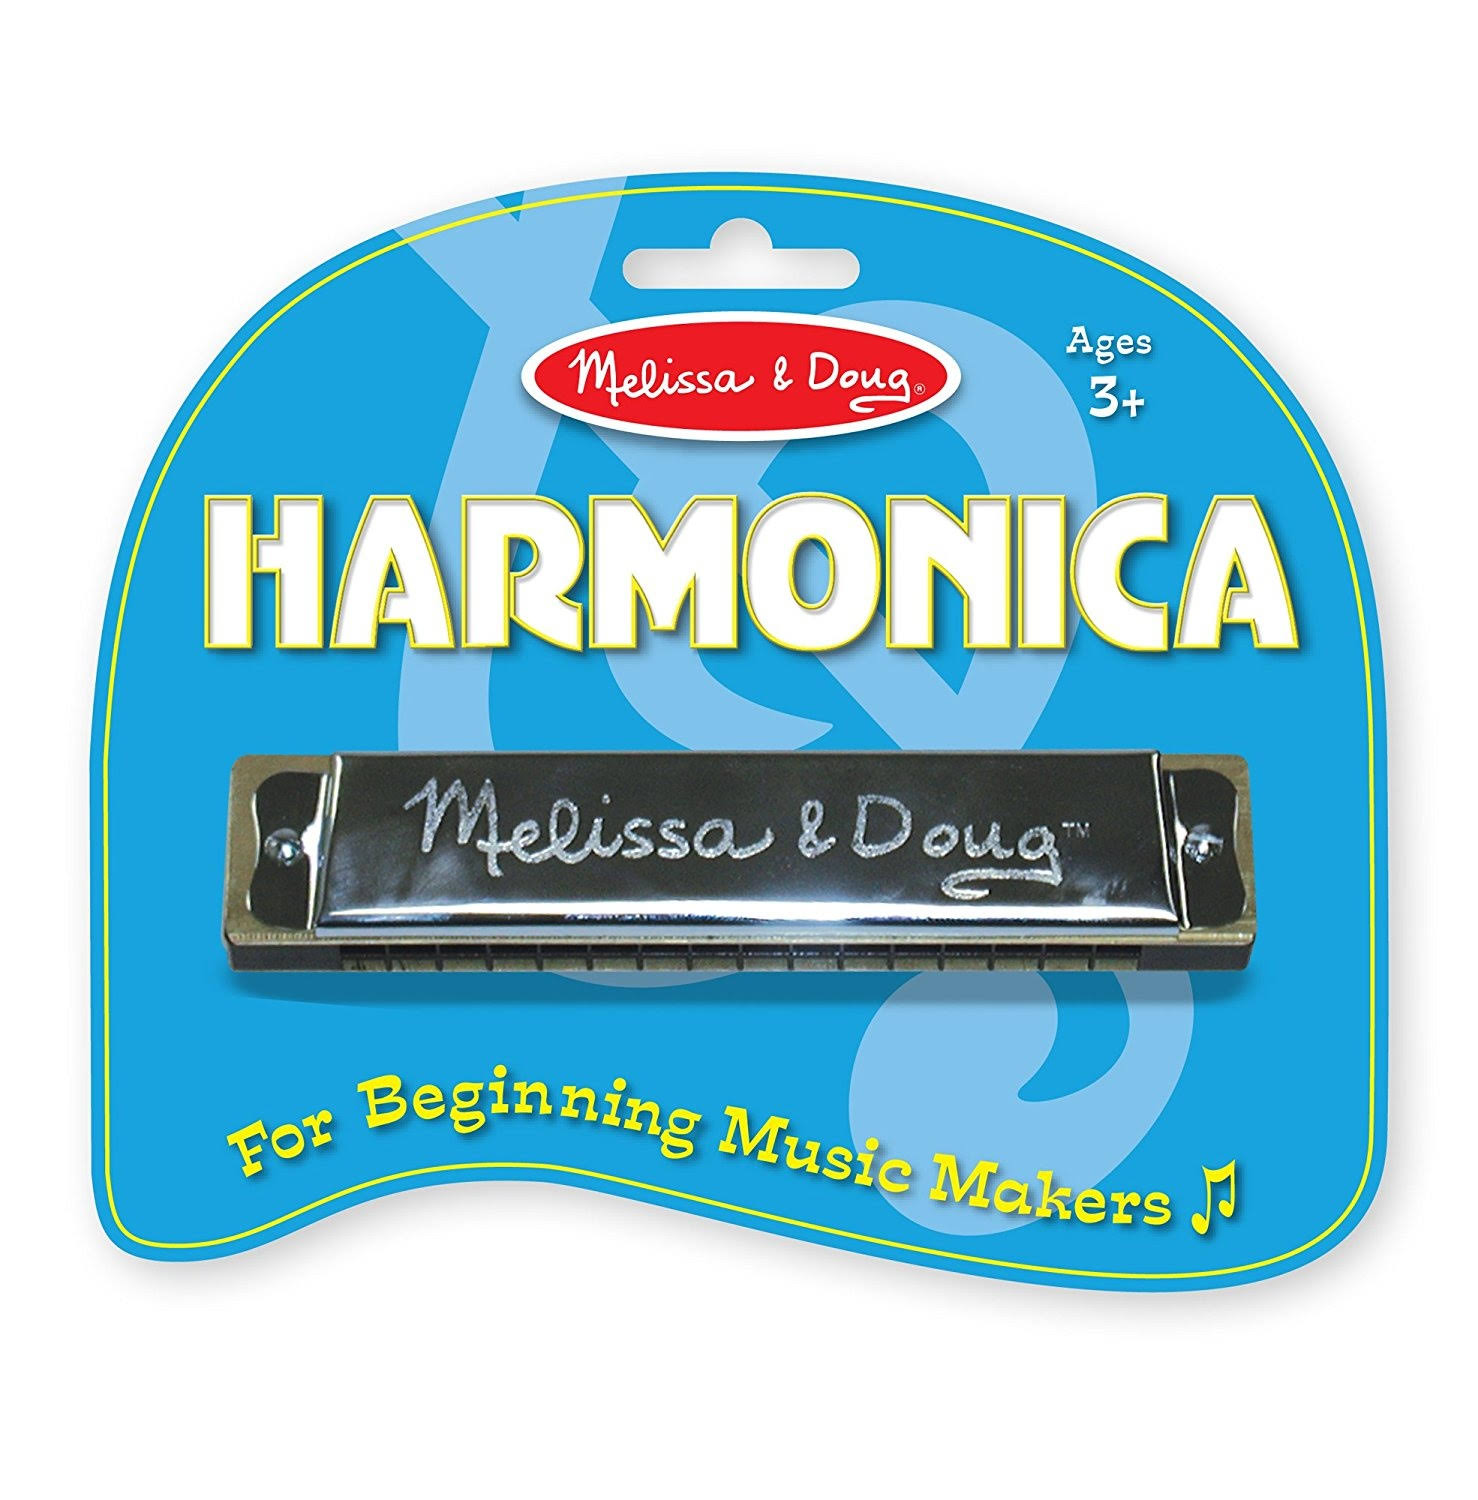 Harmonica by Melissa & Doug